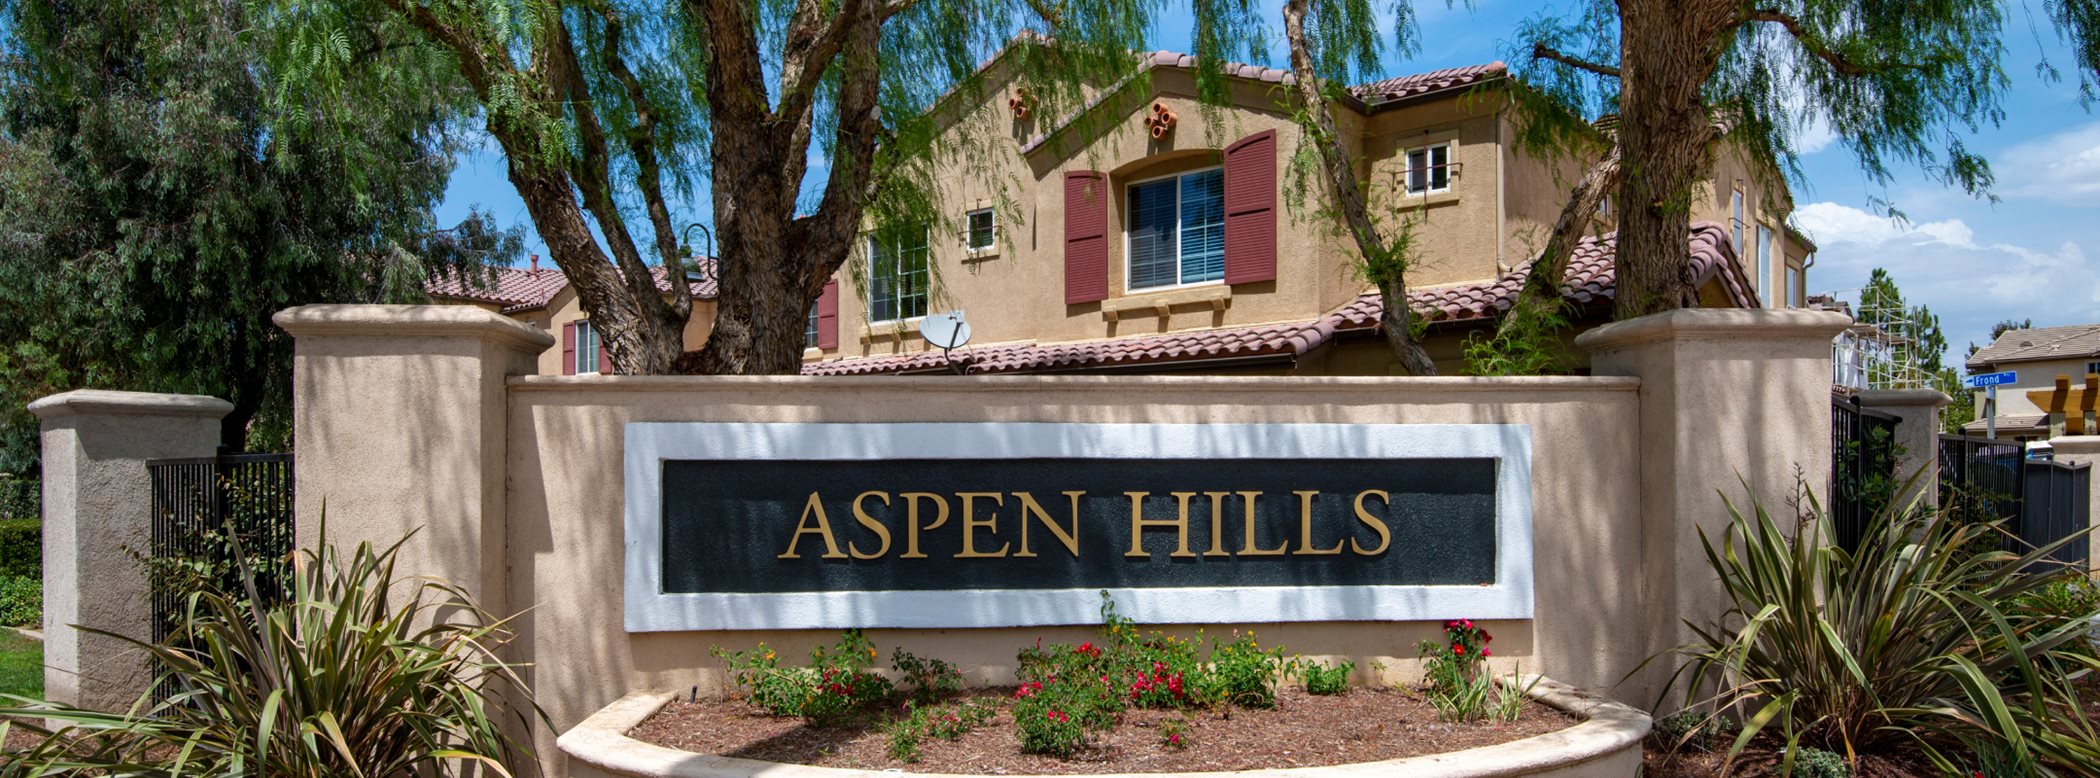 Aspen Hills monument sign